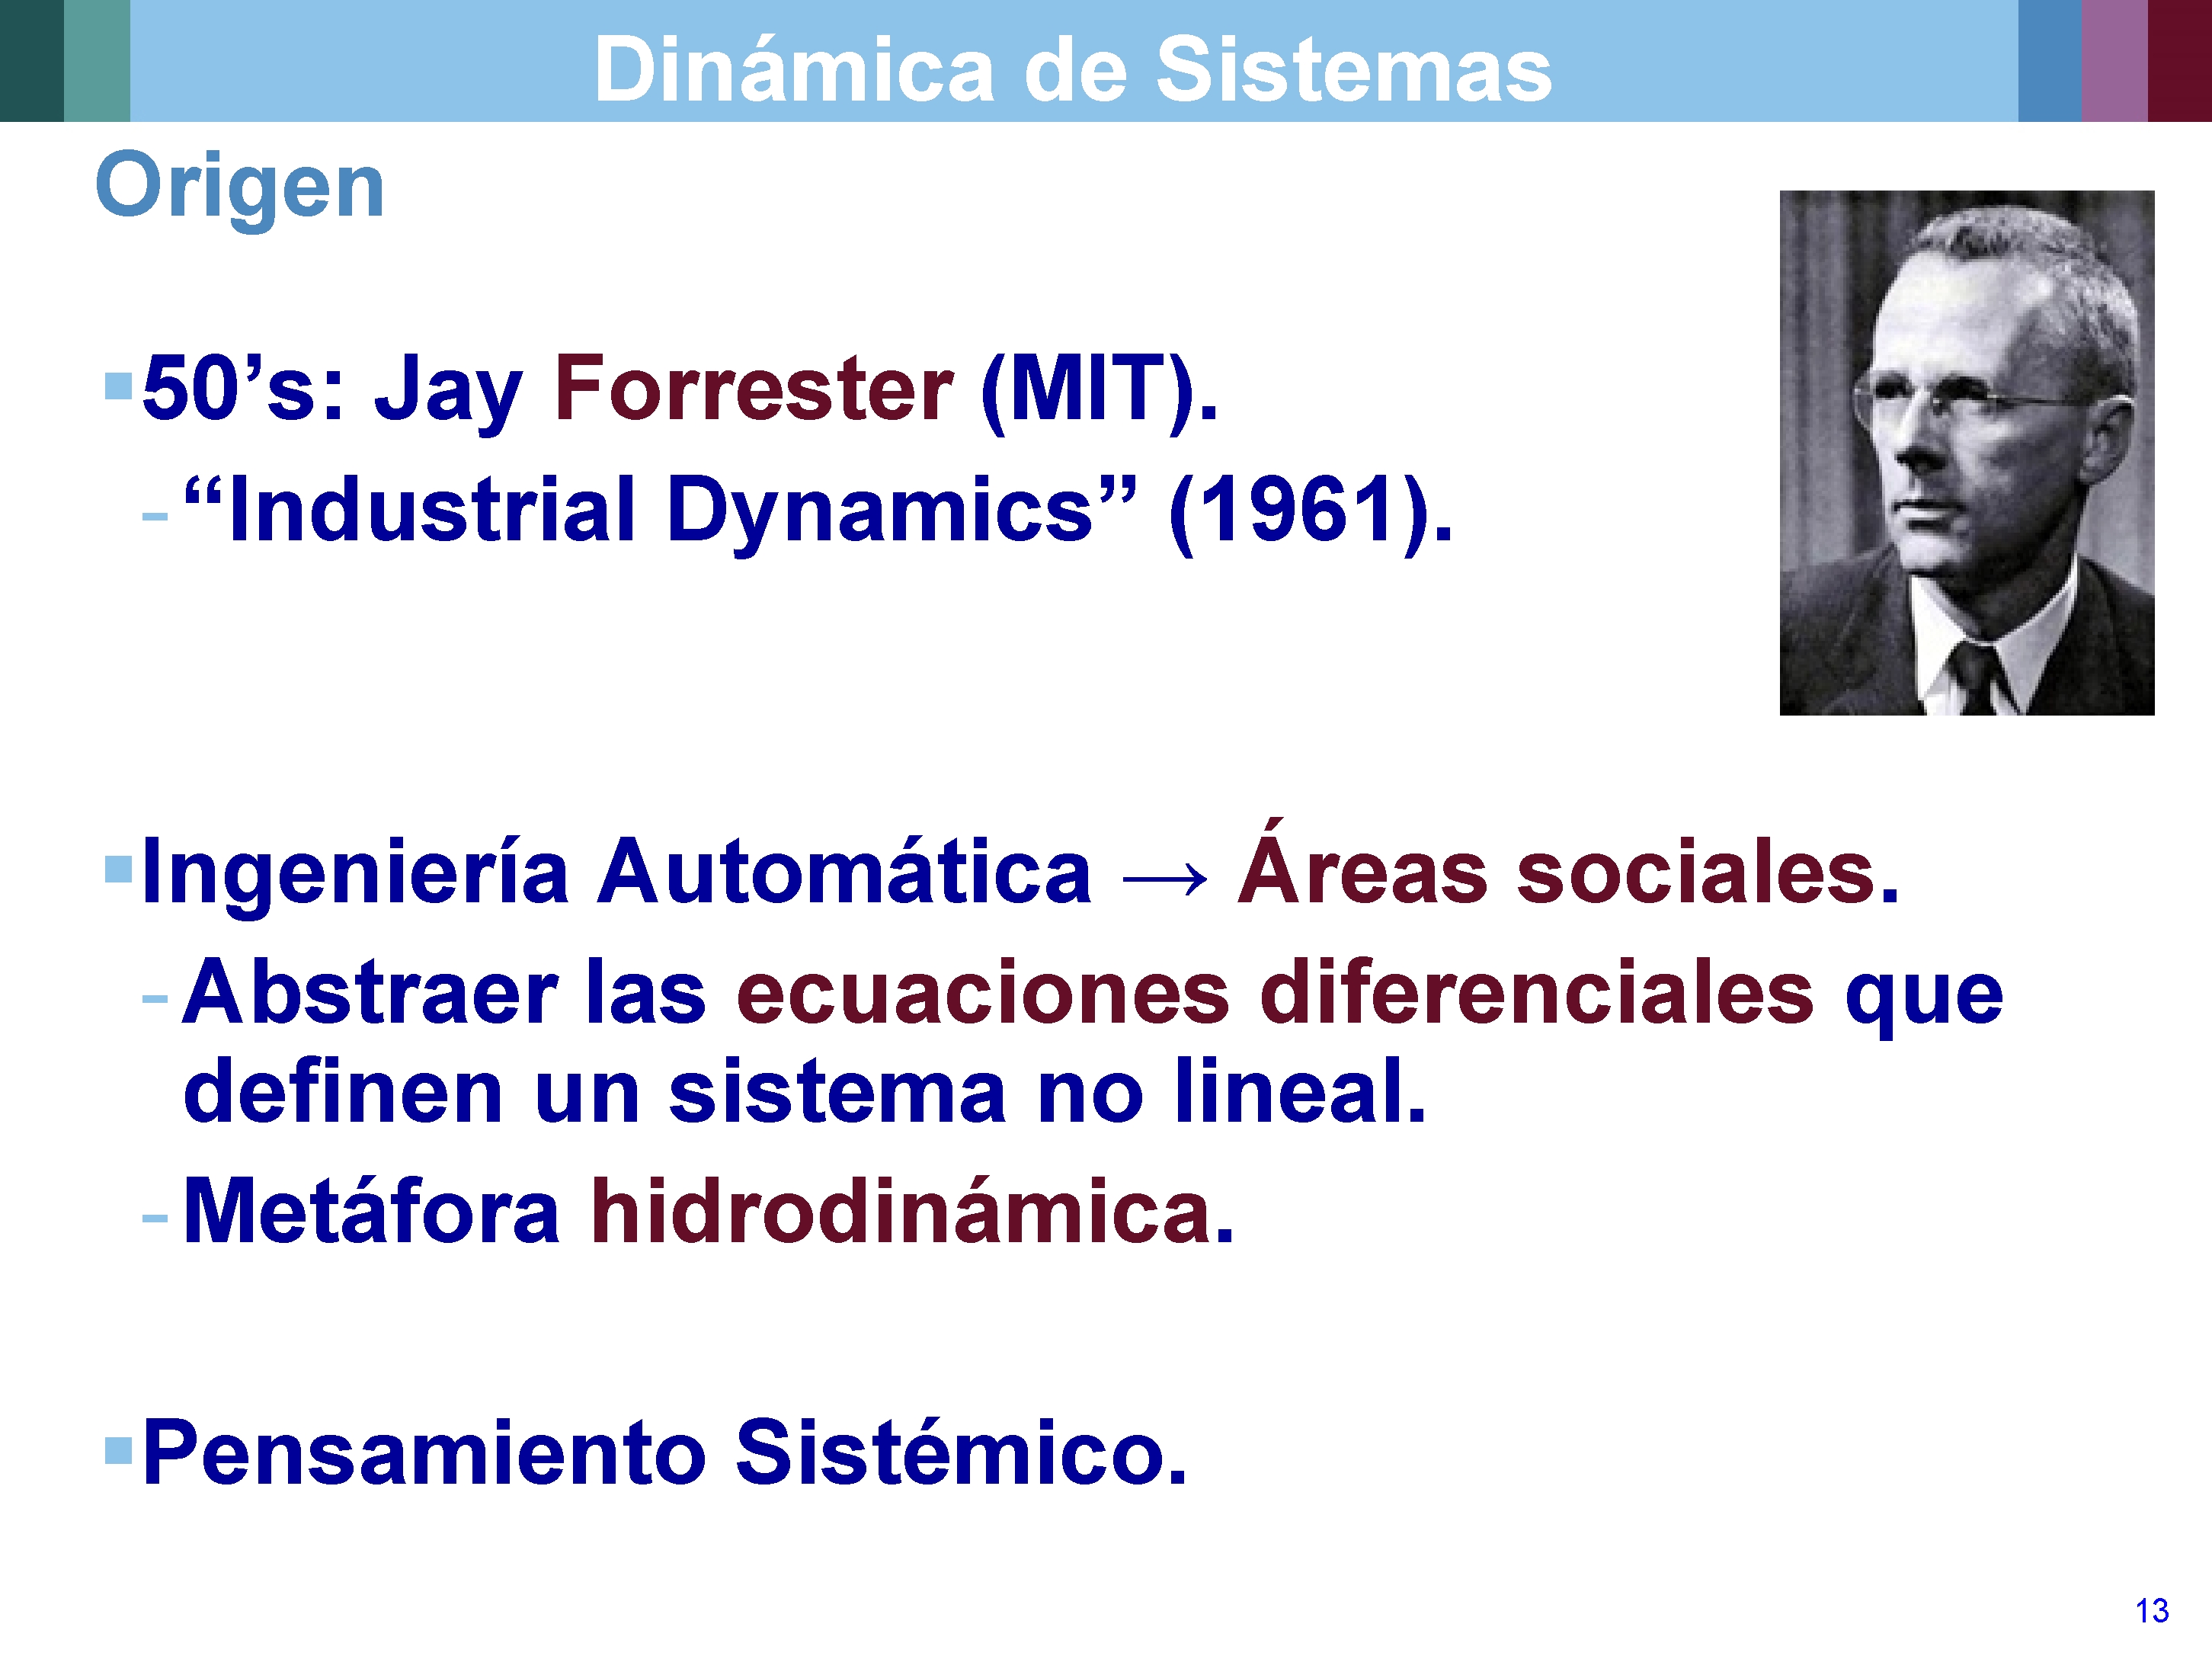 Dinámica de Sistemas Origen § 50’s: Jay Forrester (MIT). - “Industrial Dynamics” (1961). §Ingeniería